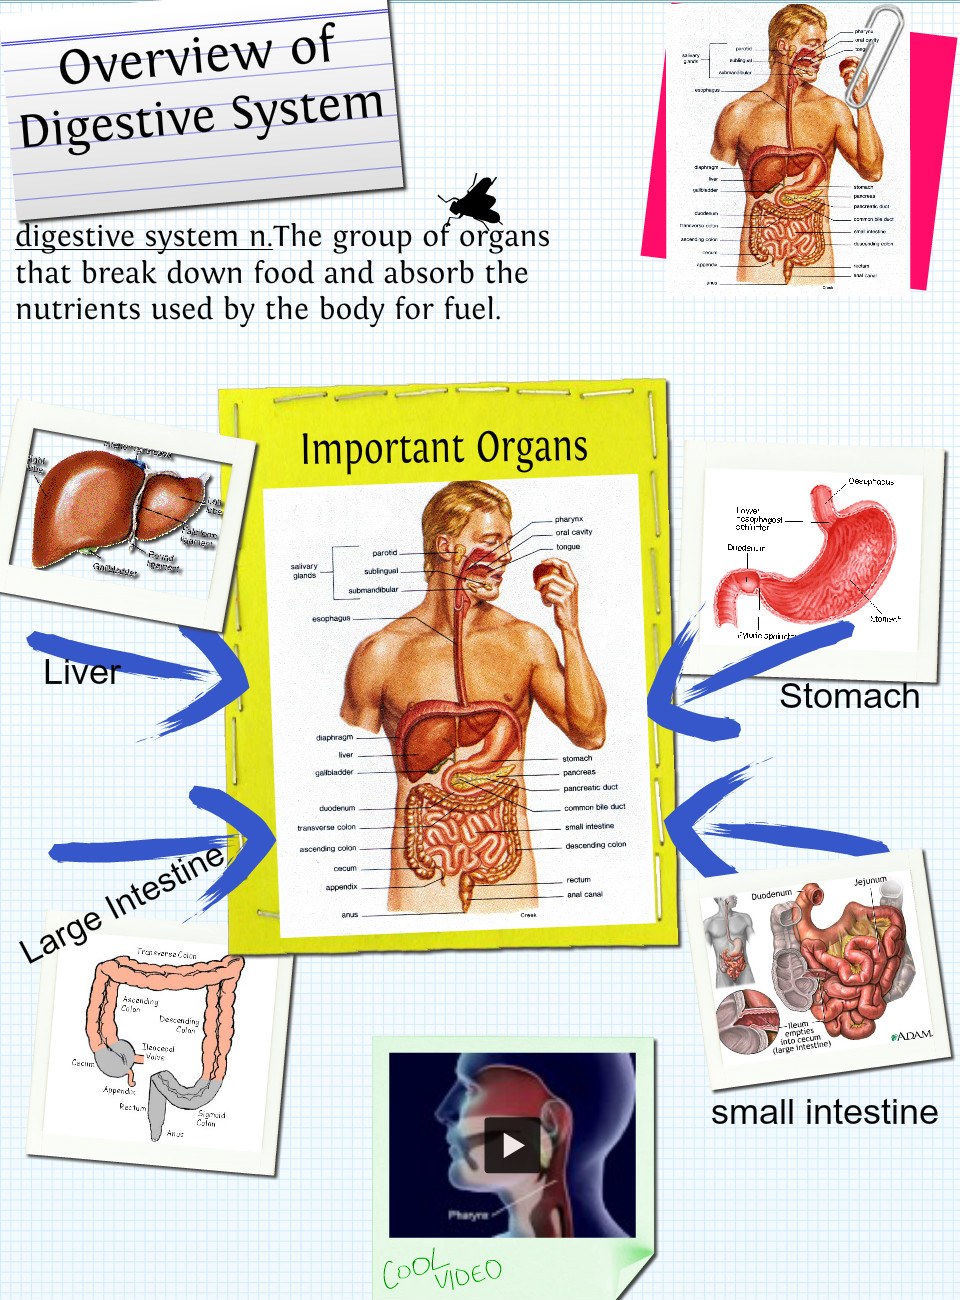 digestive-system-outline-source